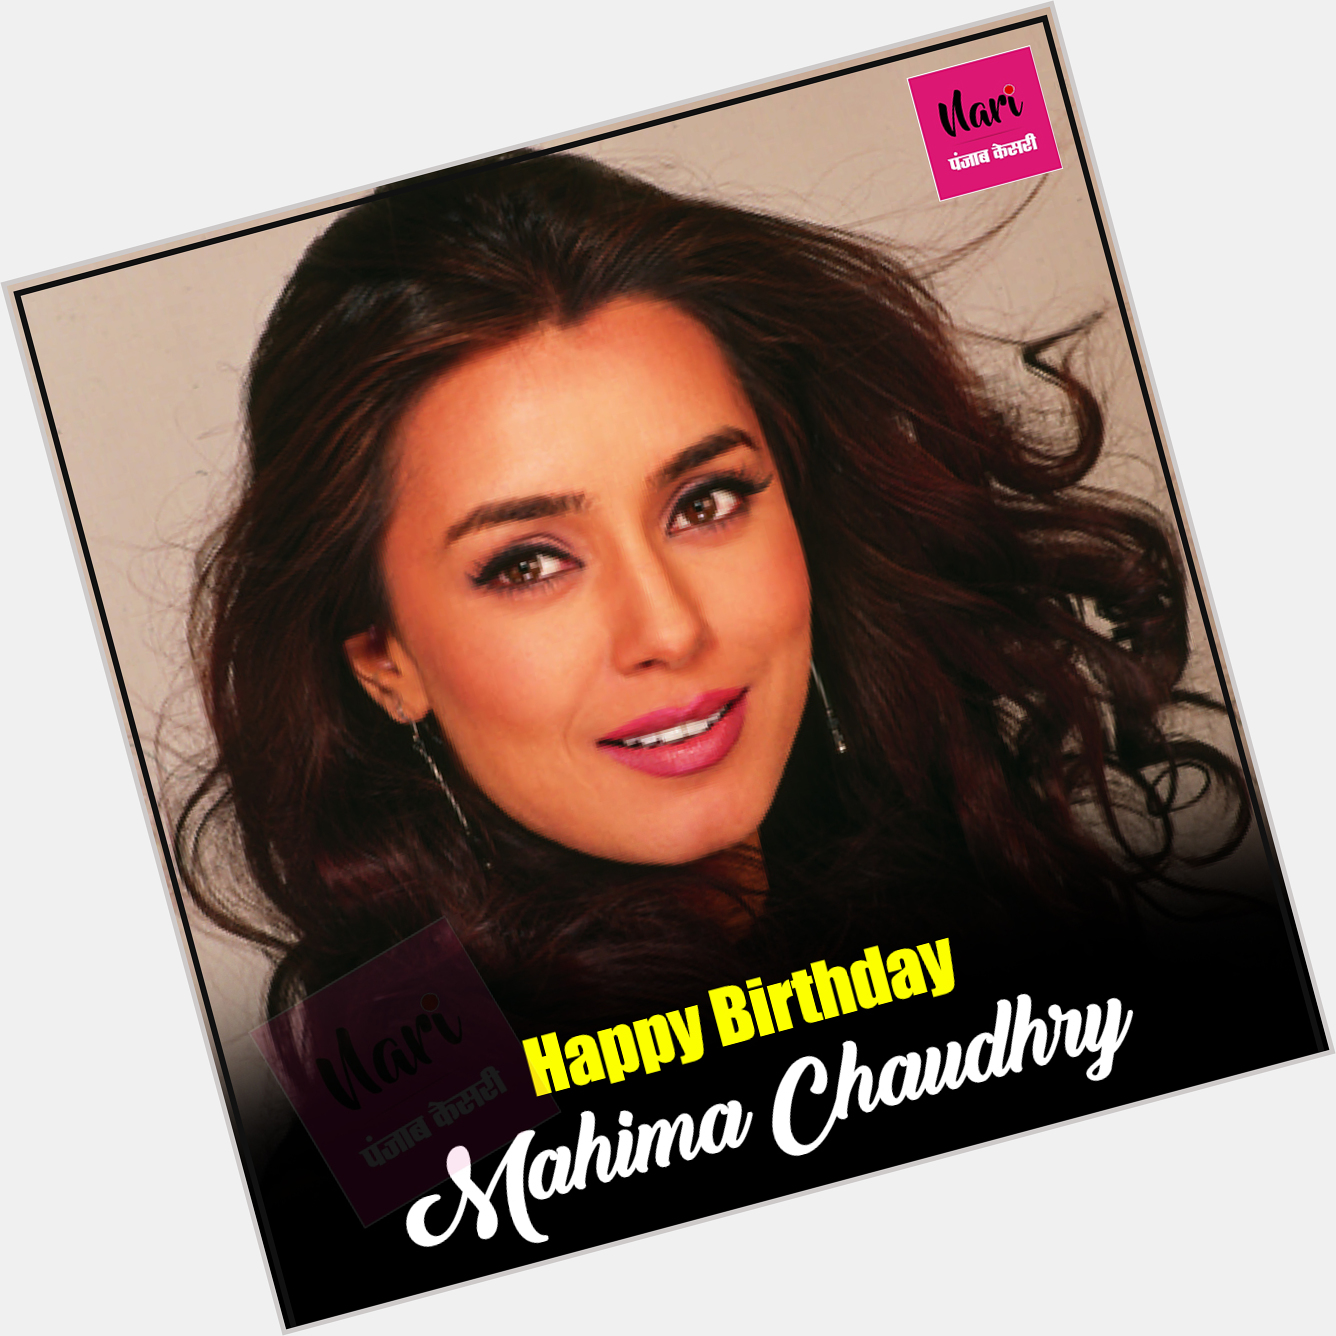 Wish You A Very Happy Birthday Mahima Chaudhry    